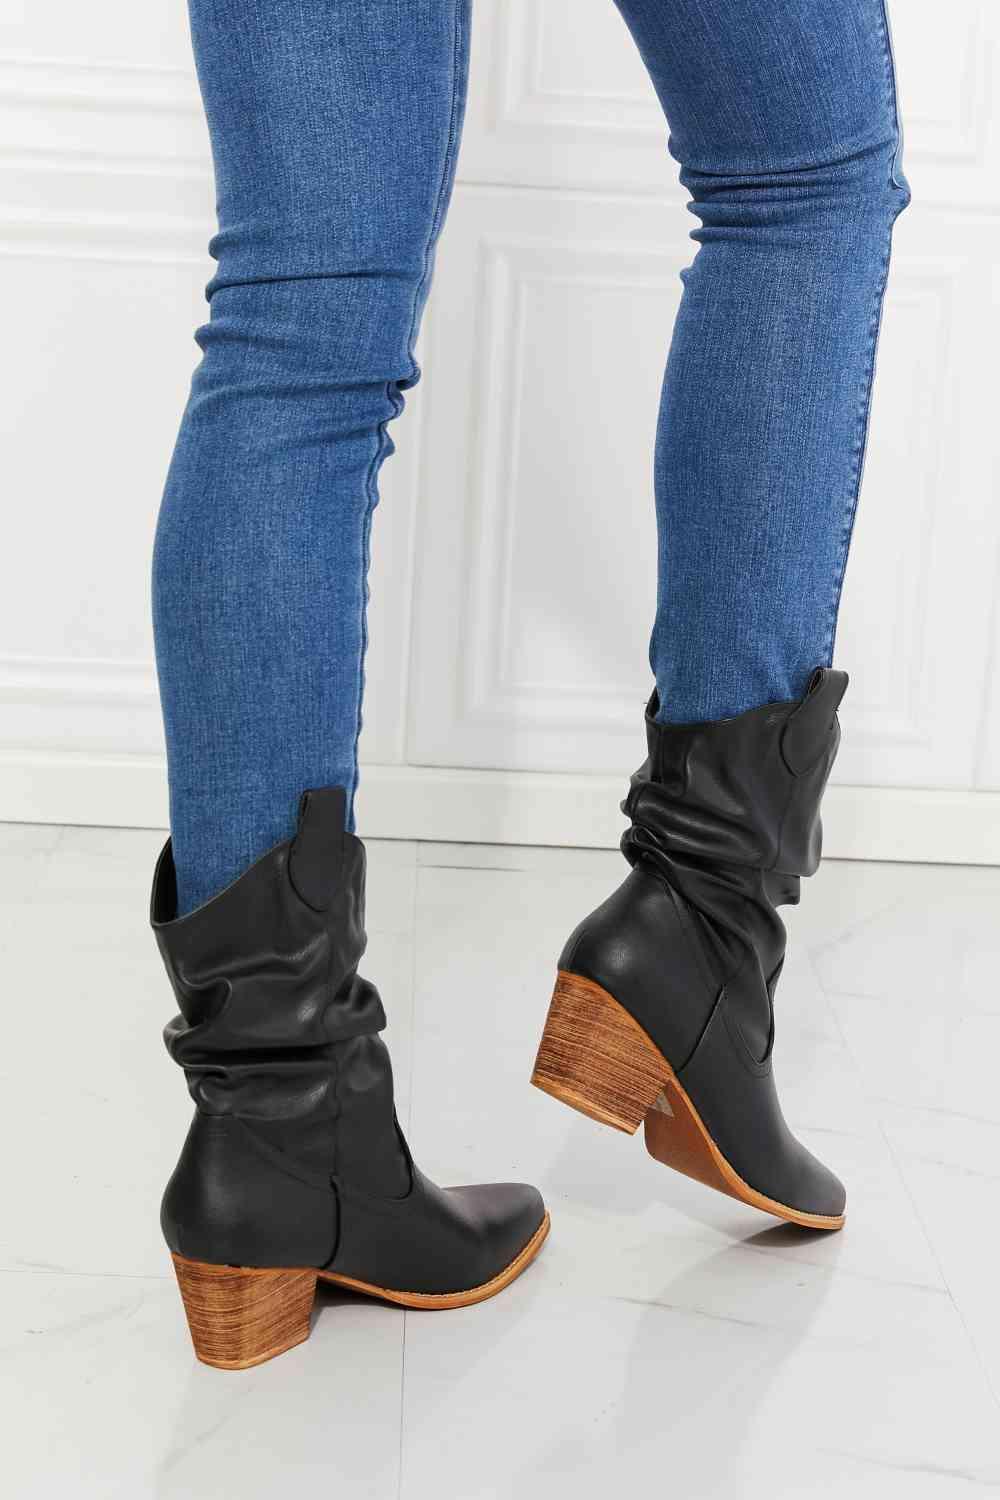 MMShoes Better in Texas Scrunch Cowboy Boots in Black - Bona Fide Fashion